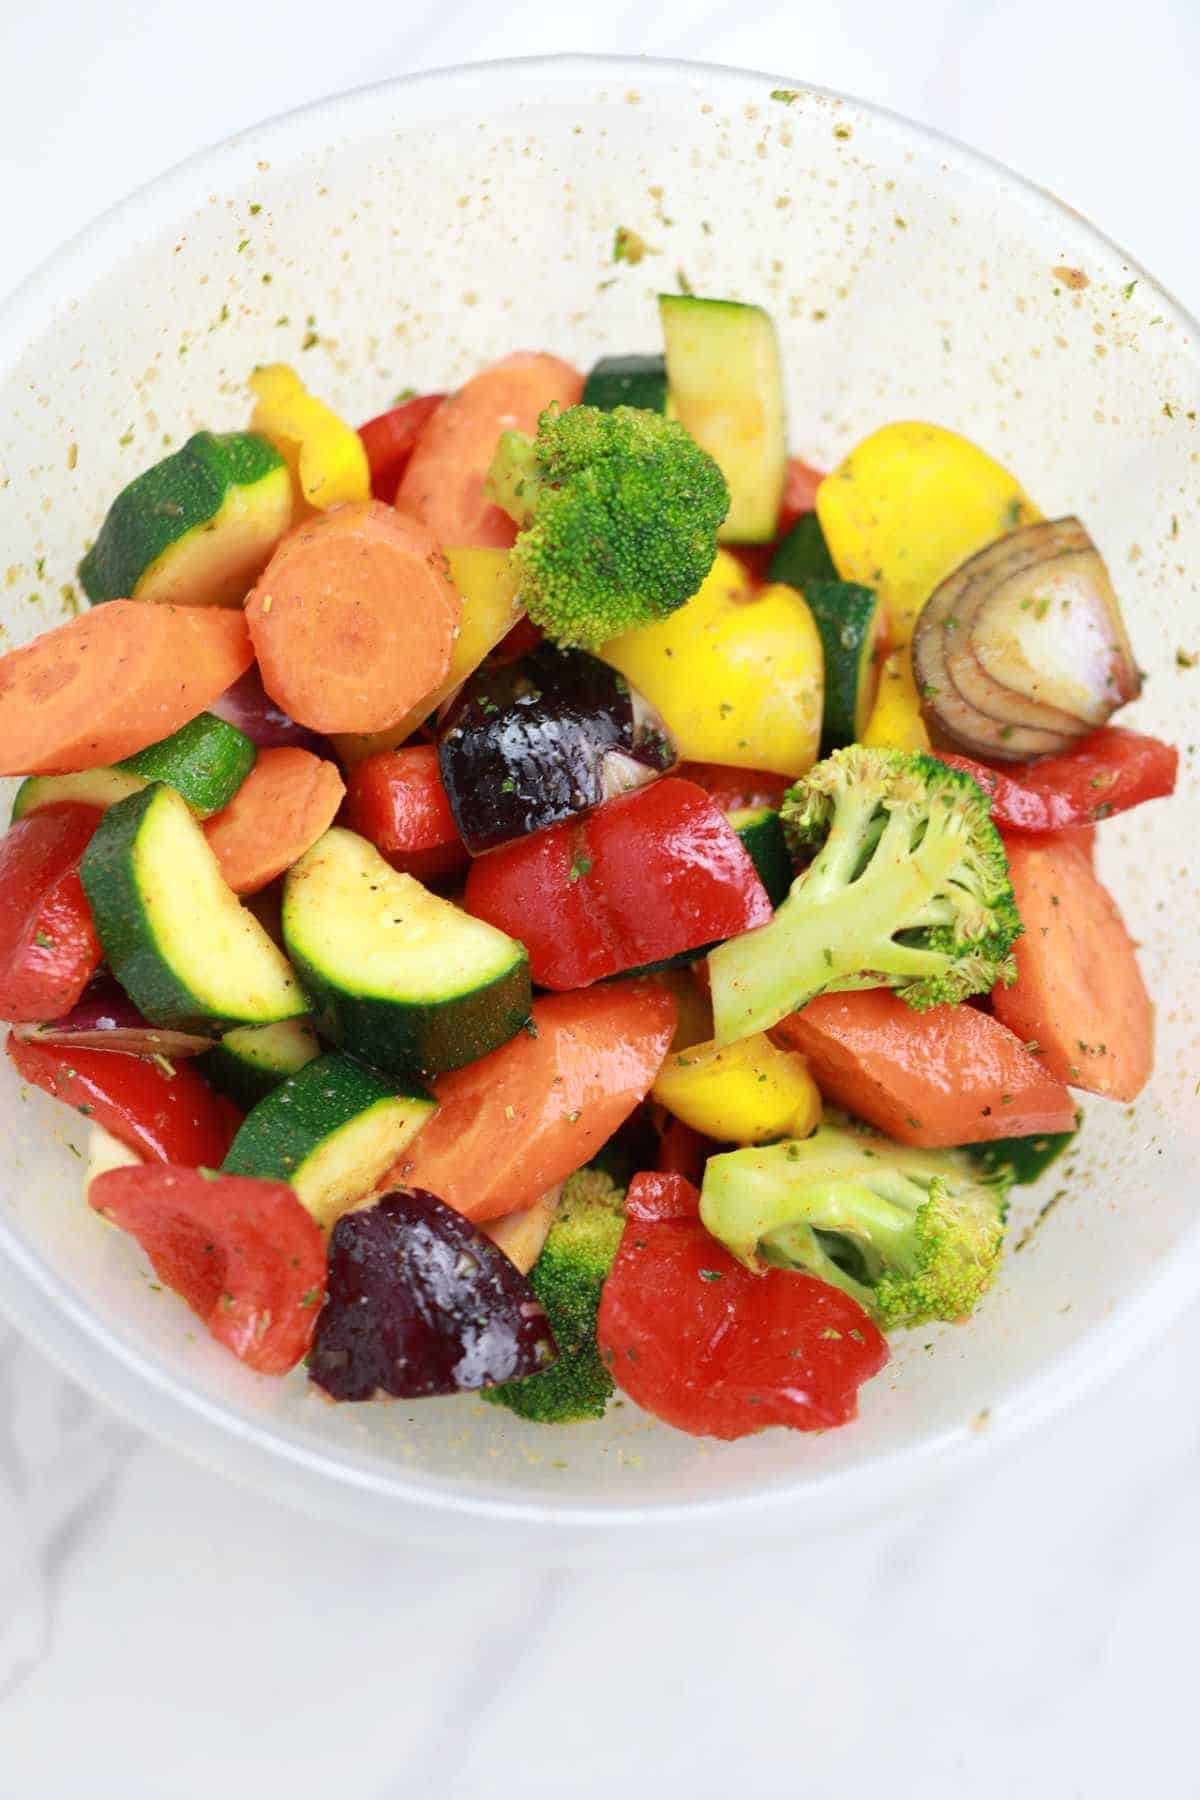 seasoned veggies in a bowl.